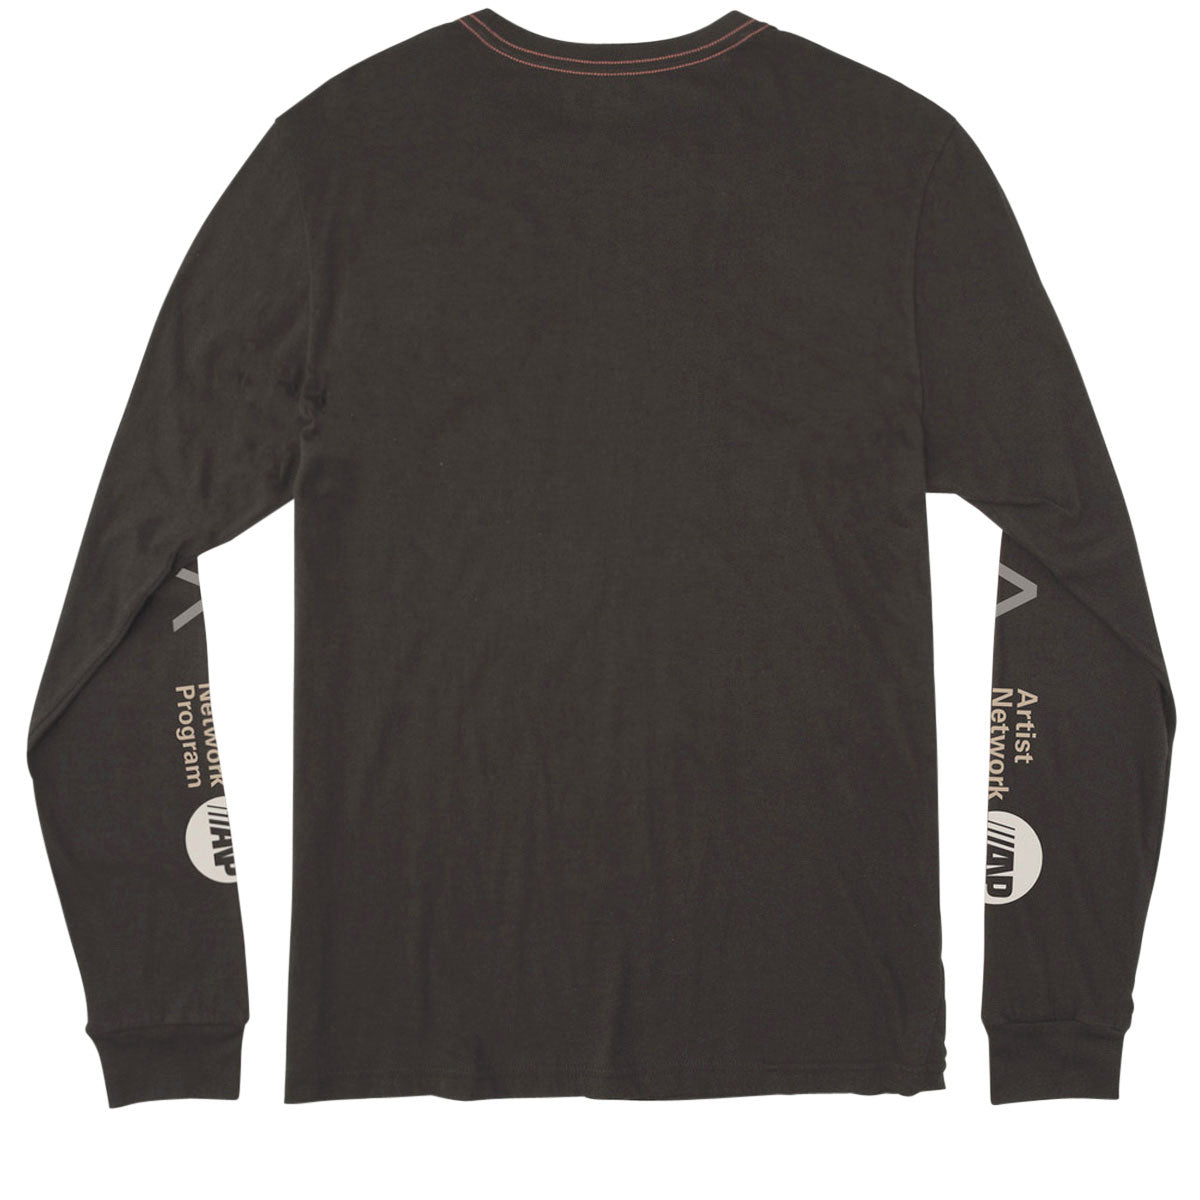 RVCA Anp Long Sleeve T-Shirt - Pirates Black image 2